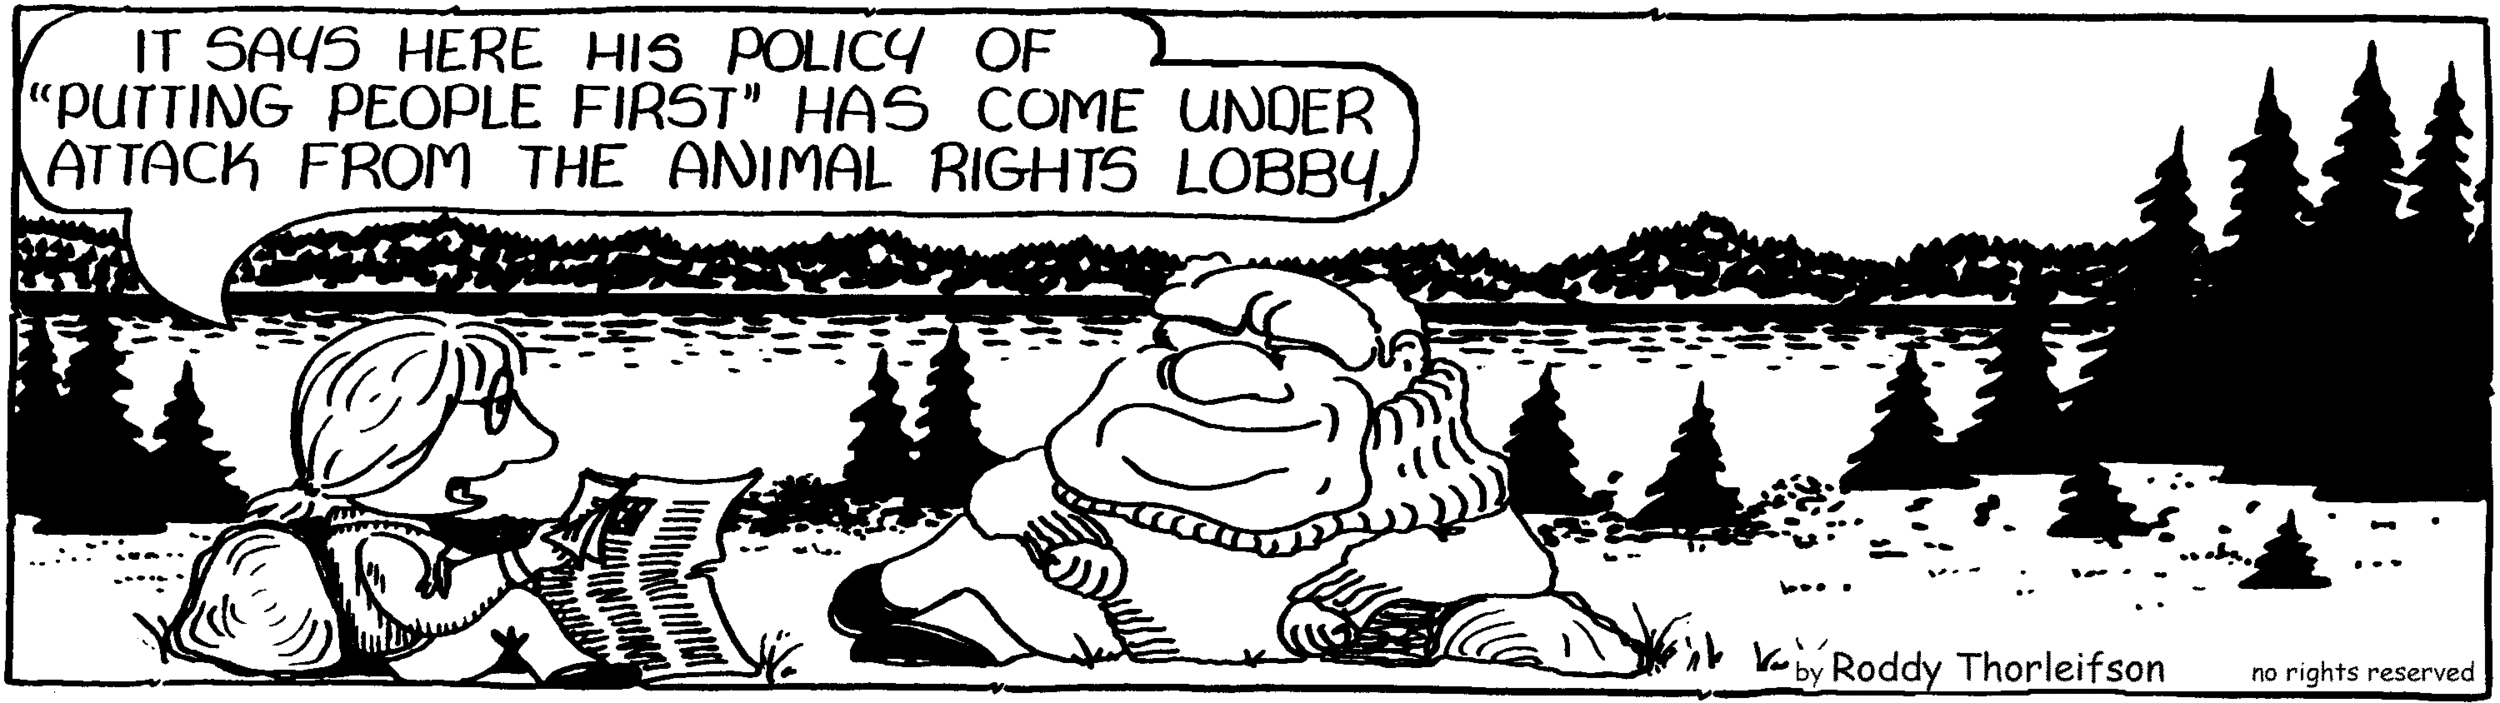 free cartoon politics politicians political animal rights